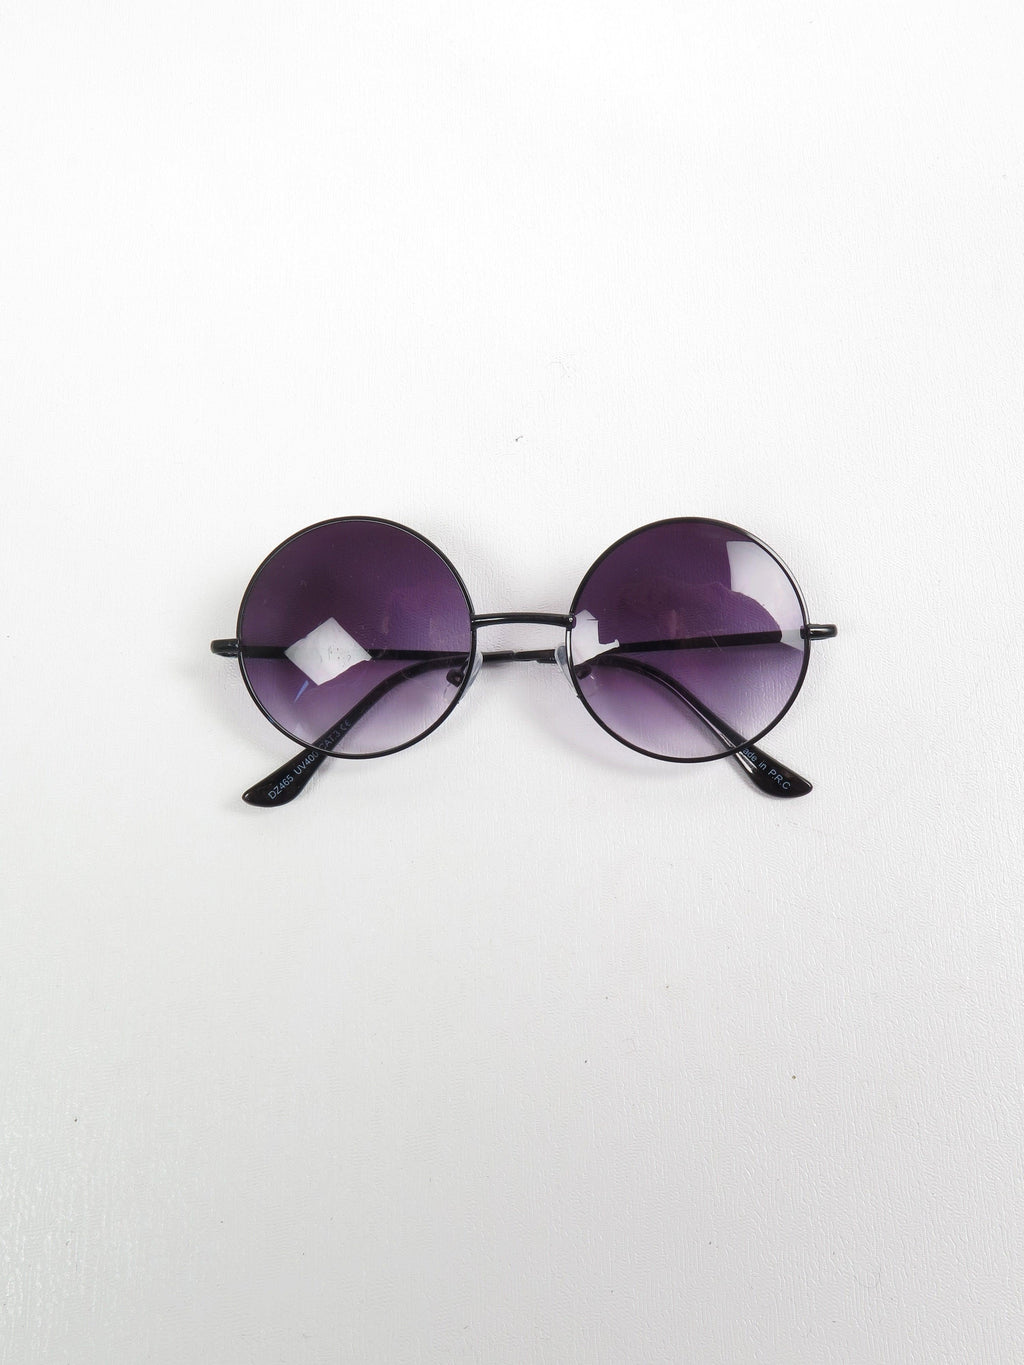 Lennon Style Round Sunglasses With Black Frames & Dark Purple Lenses - The Harlequin